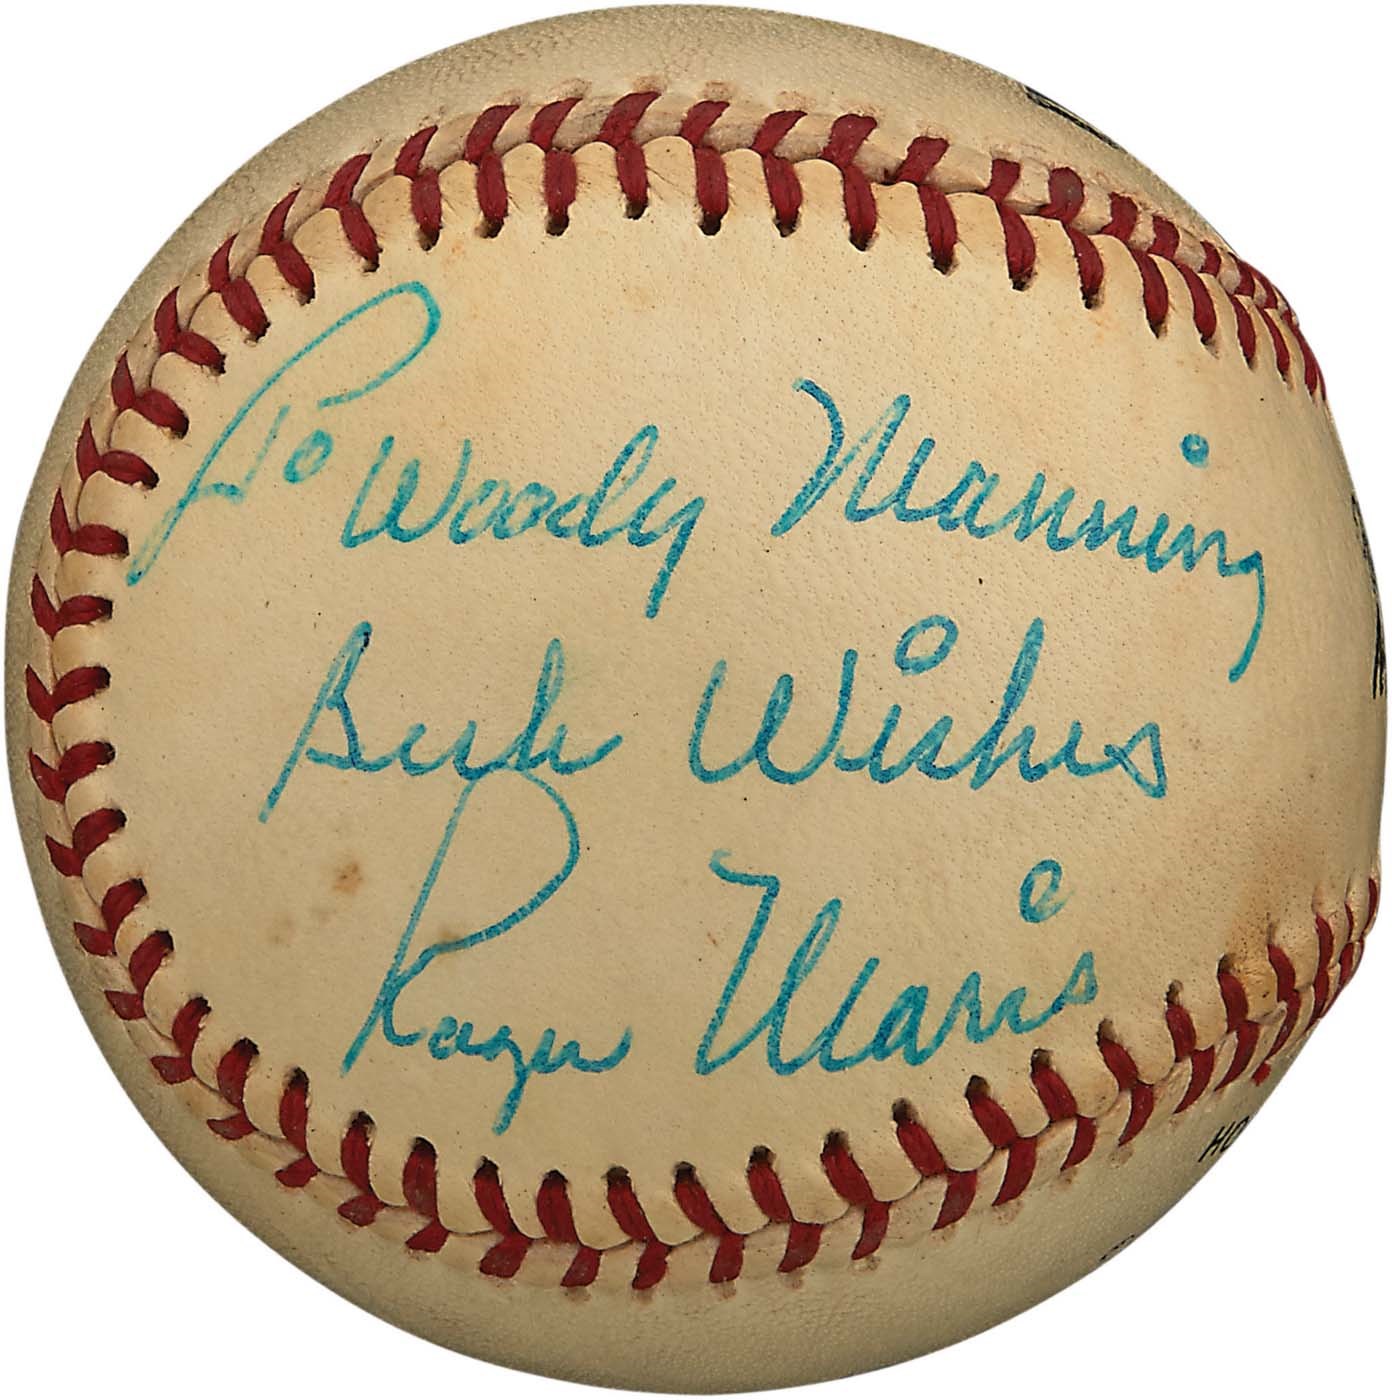 Roger Maris Single-Signed Baseball (JSA)